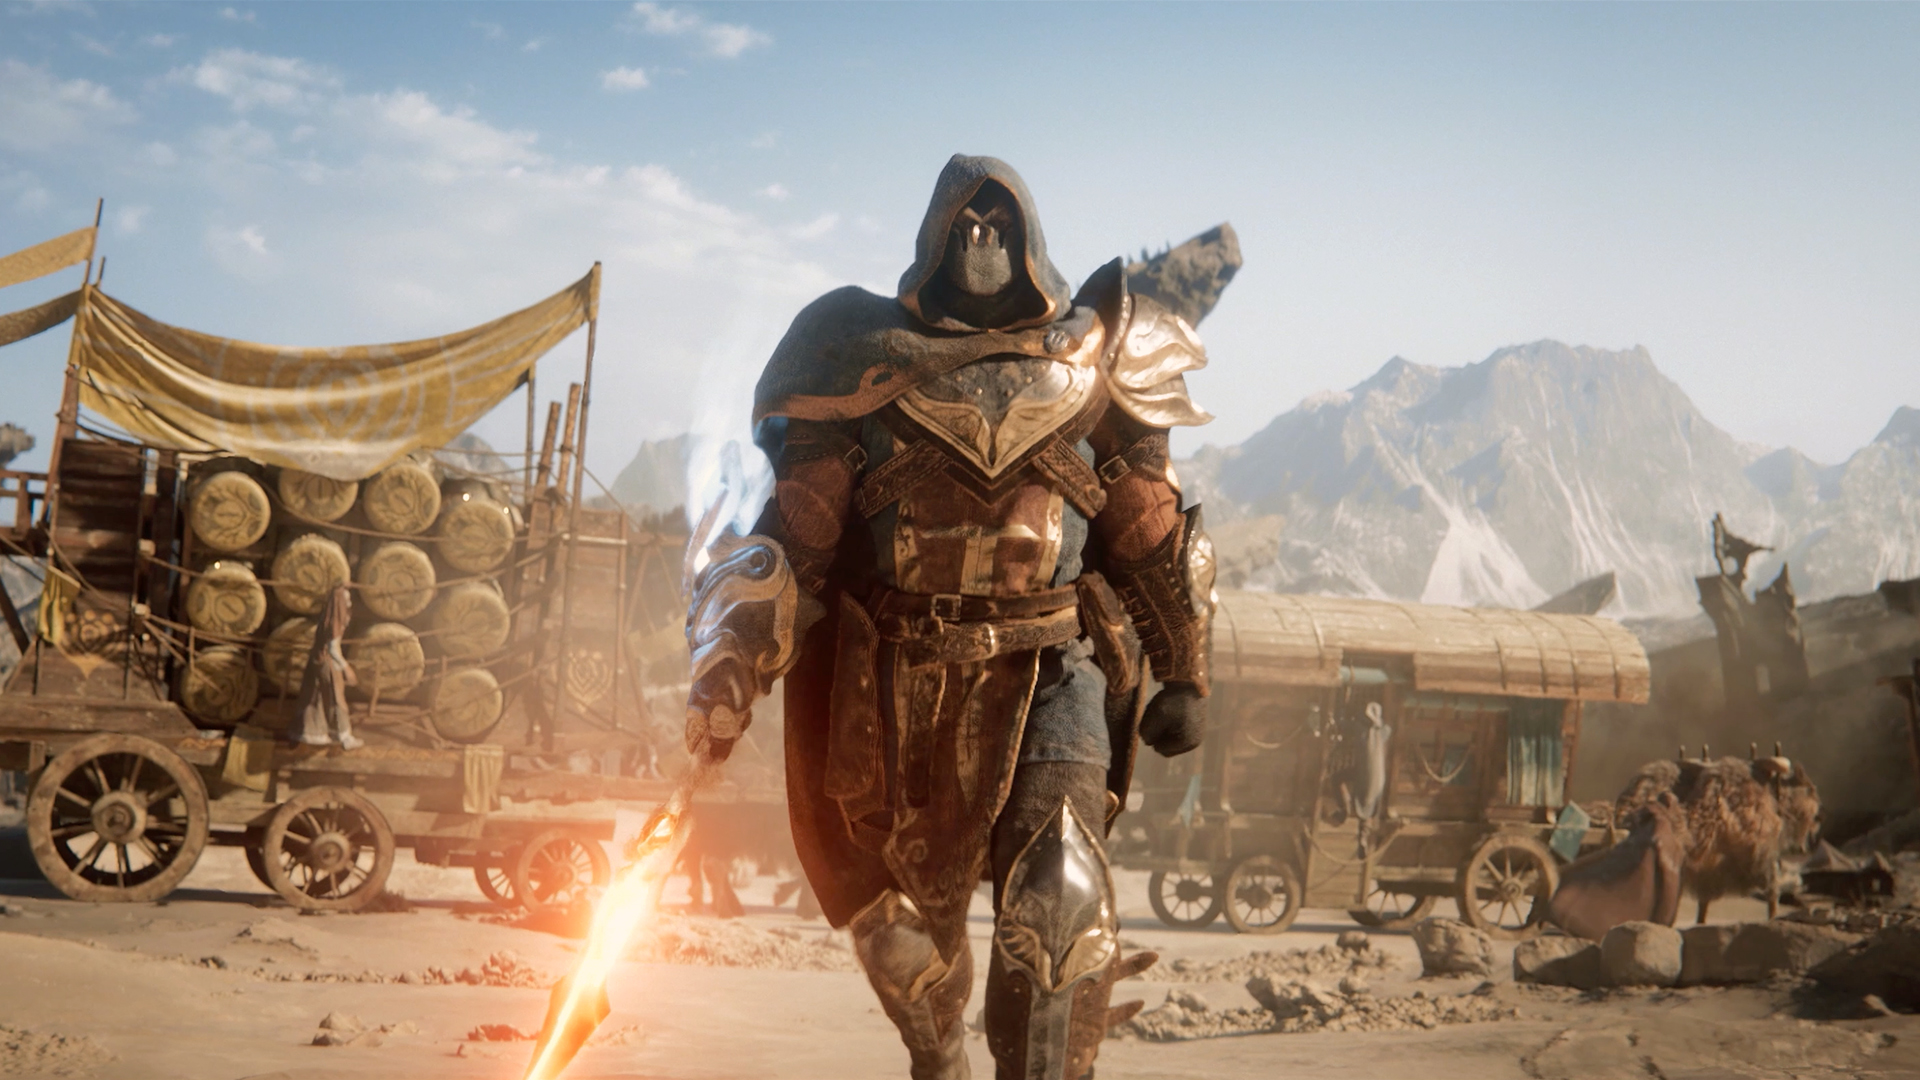 A warrior wields a glowing sword and guards a caravan in a still from Atlas Fallen’s debut cinematic trailer